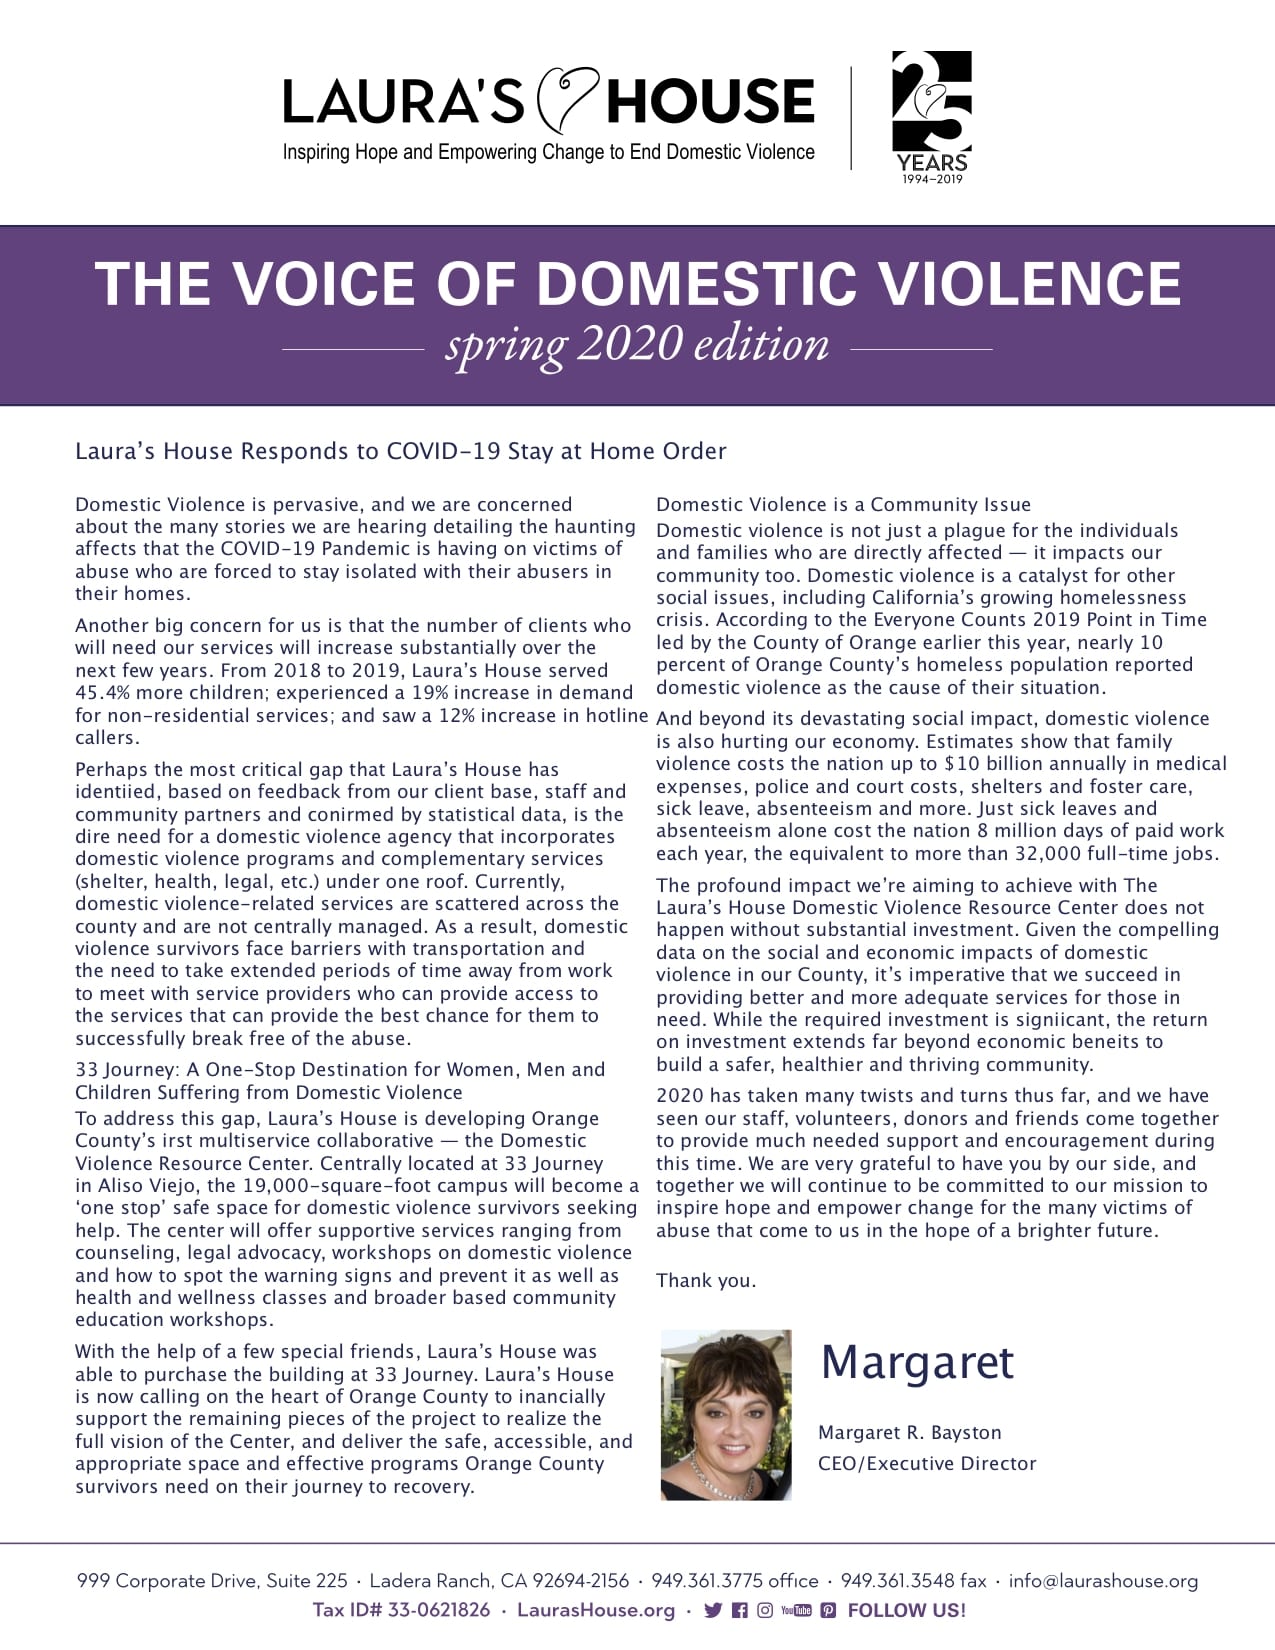 domestic violence article 2022